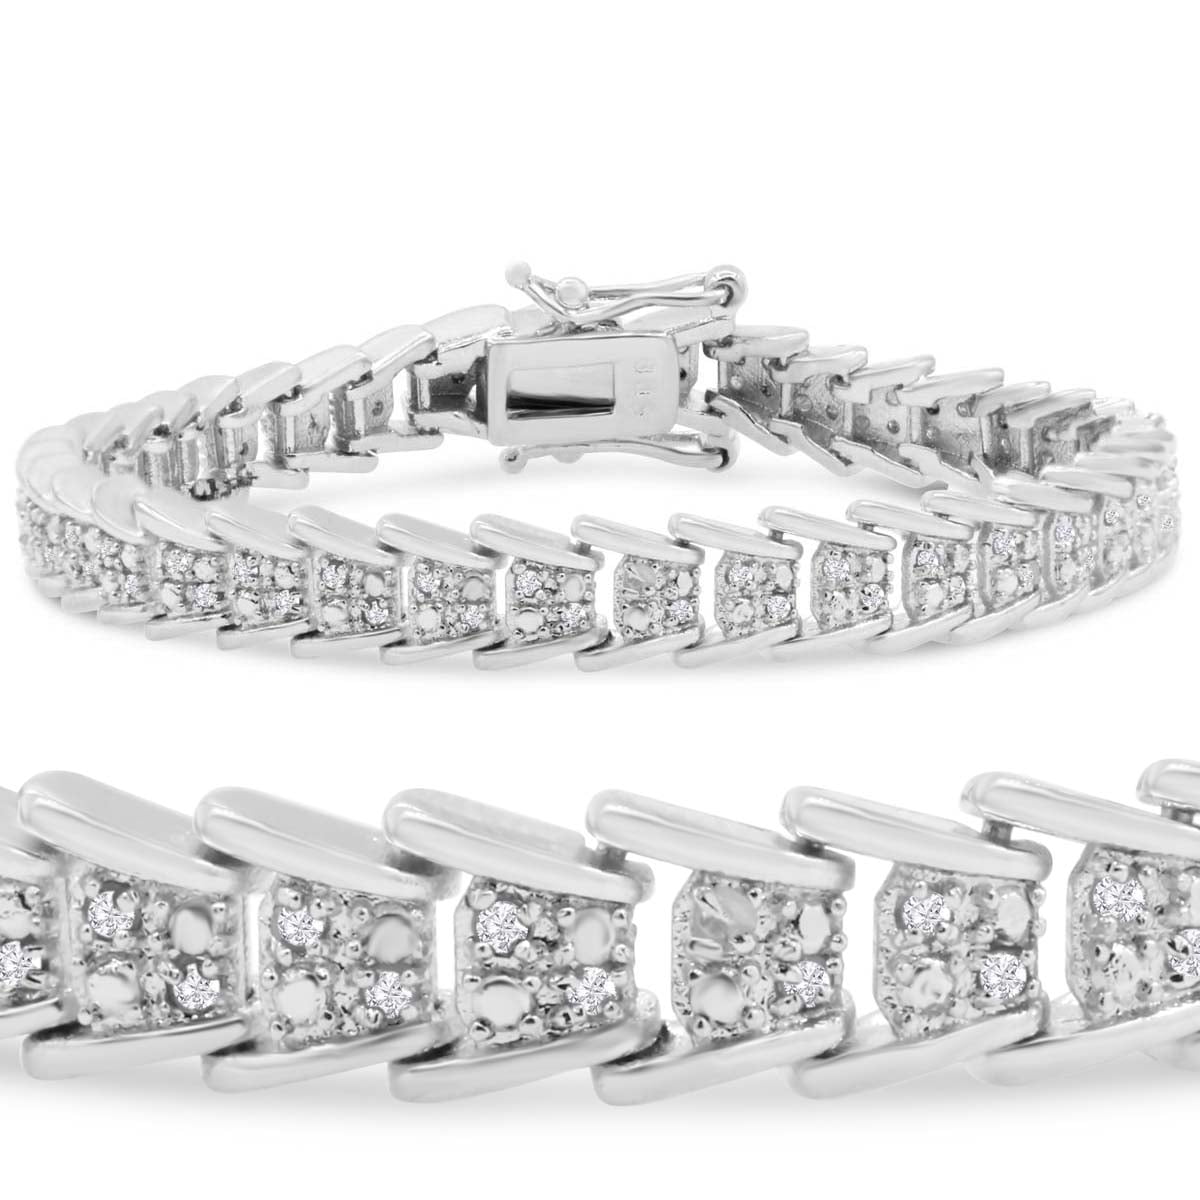 SuperJeweler 1 Carat Diamond Bracelet In Platinum Overlay, 7 Inches For Women